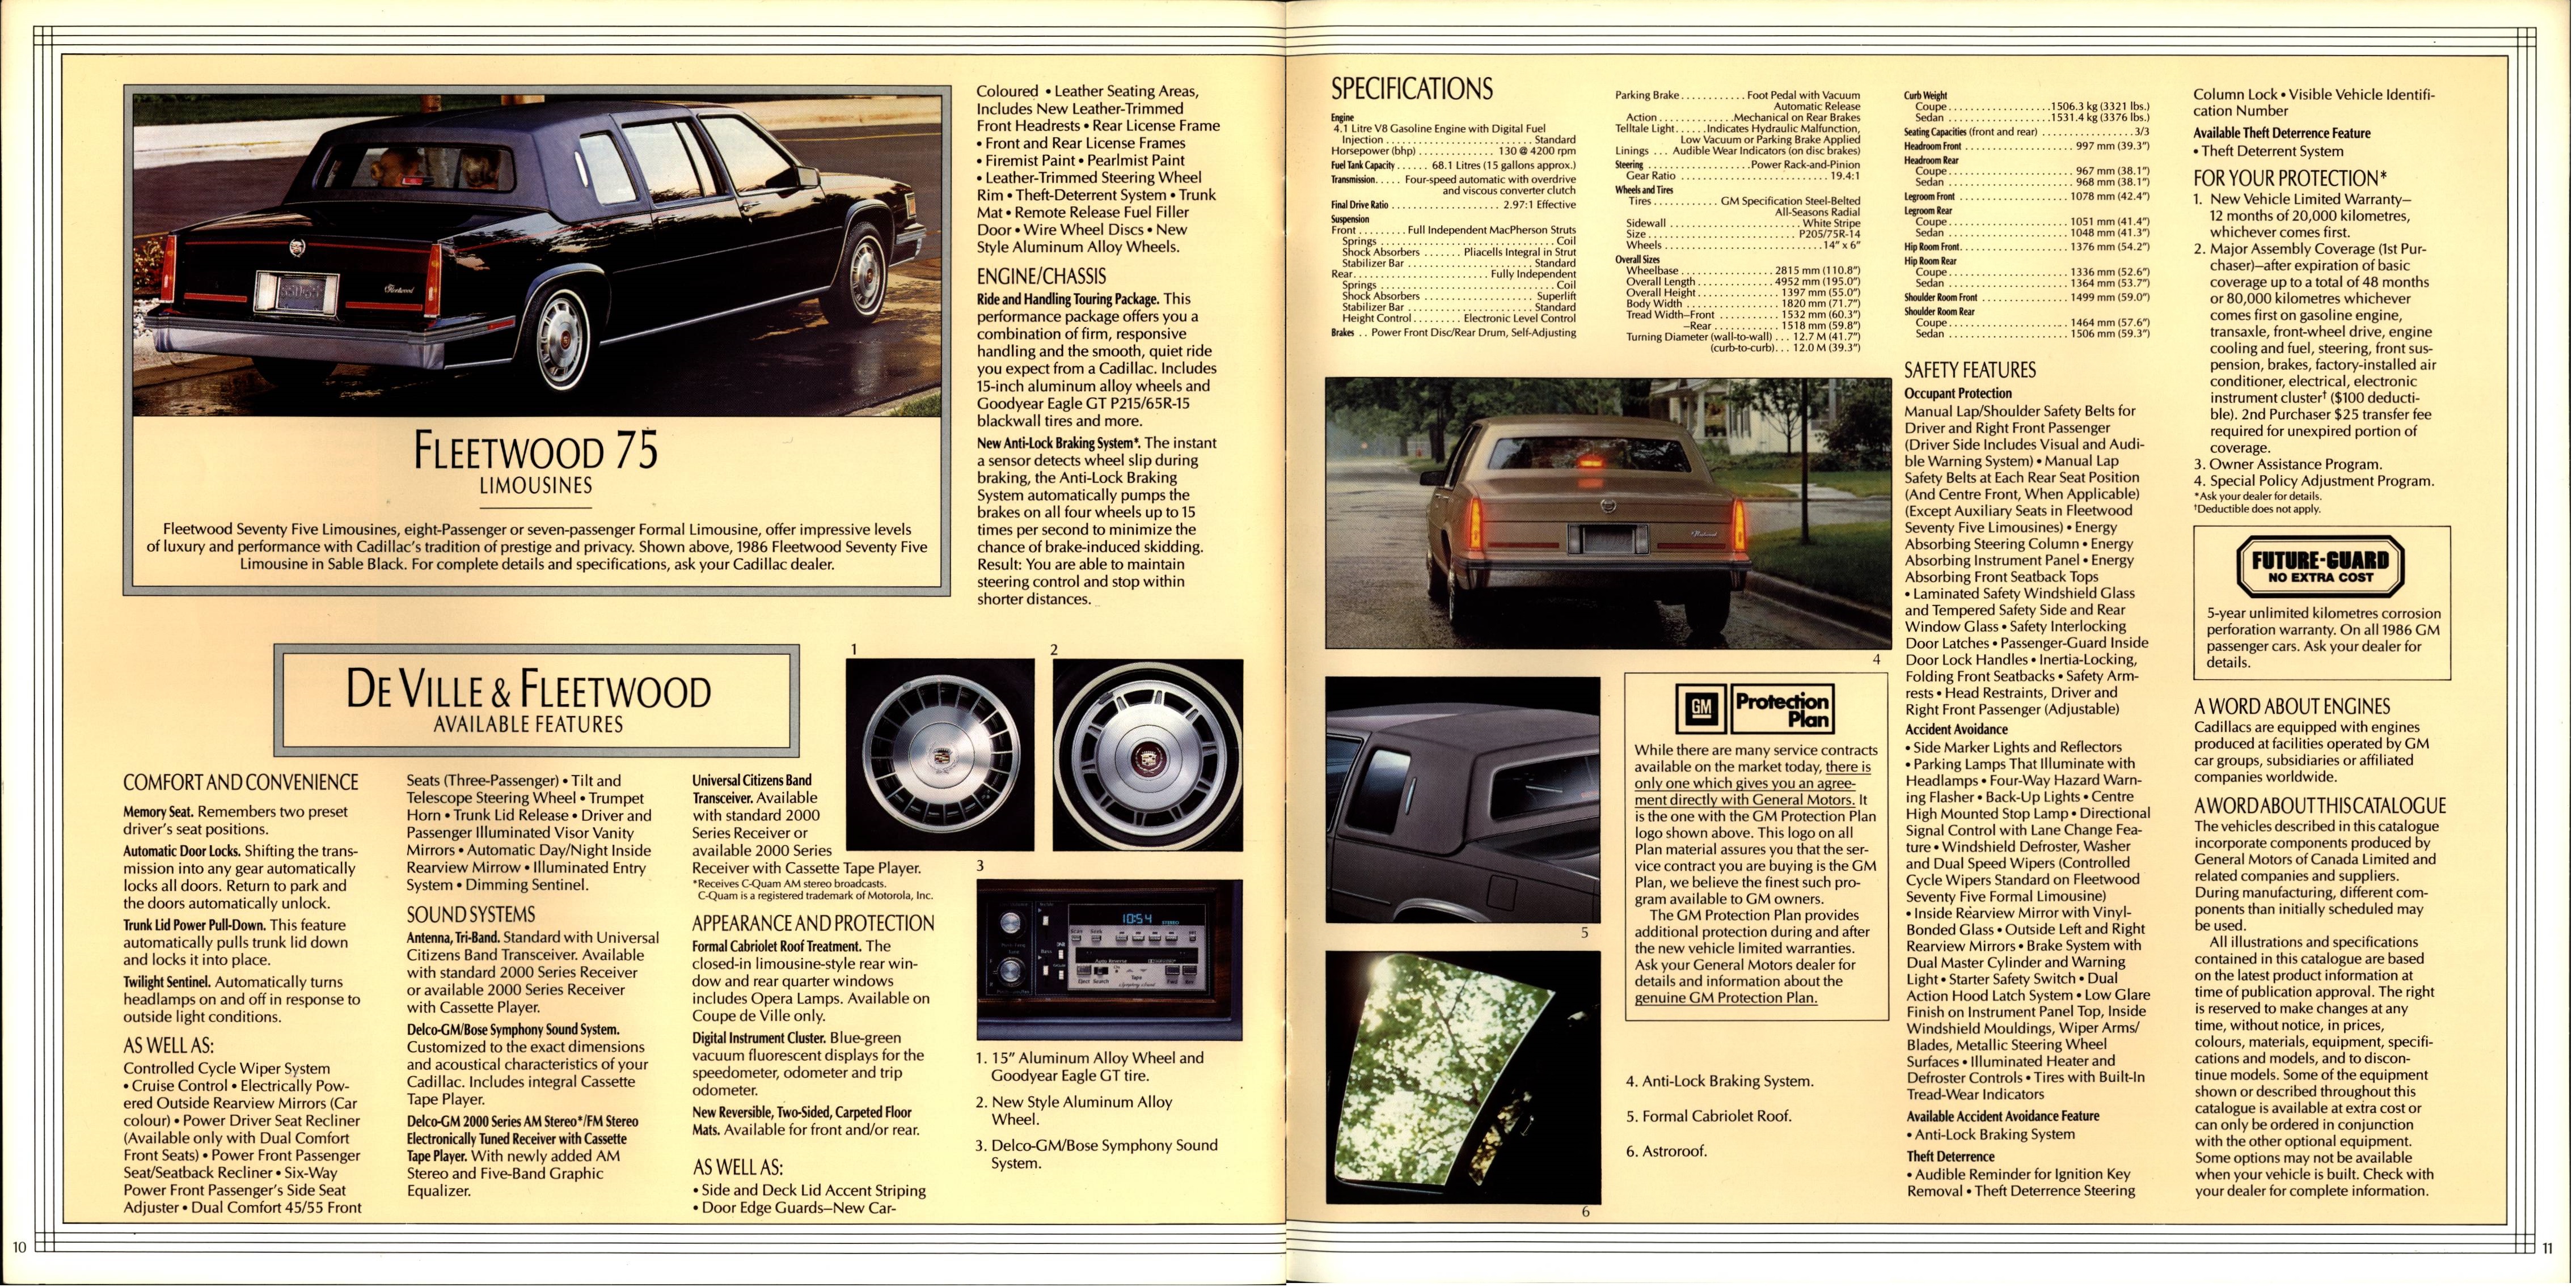 1986 Cadillac Fleetwood-DeVille Brochure (Cdn) 10-11